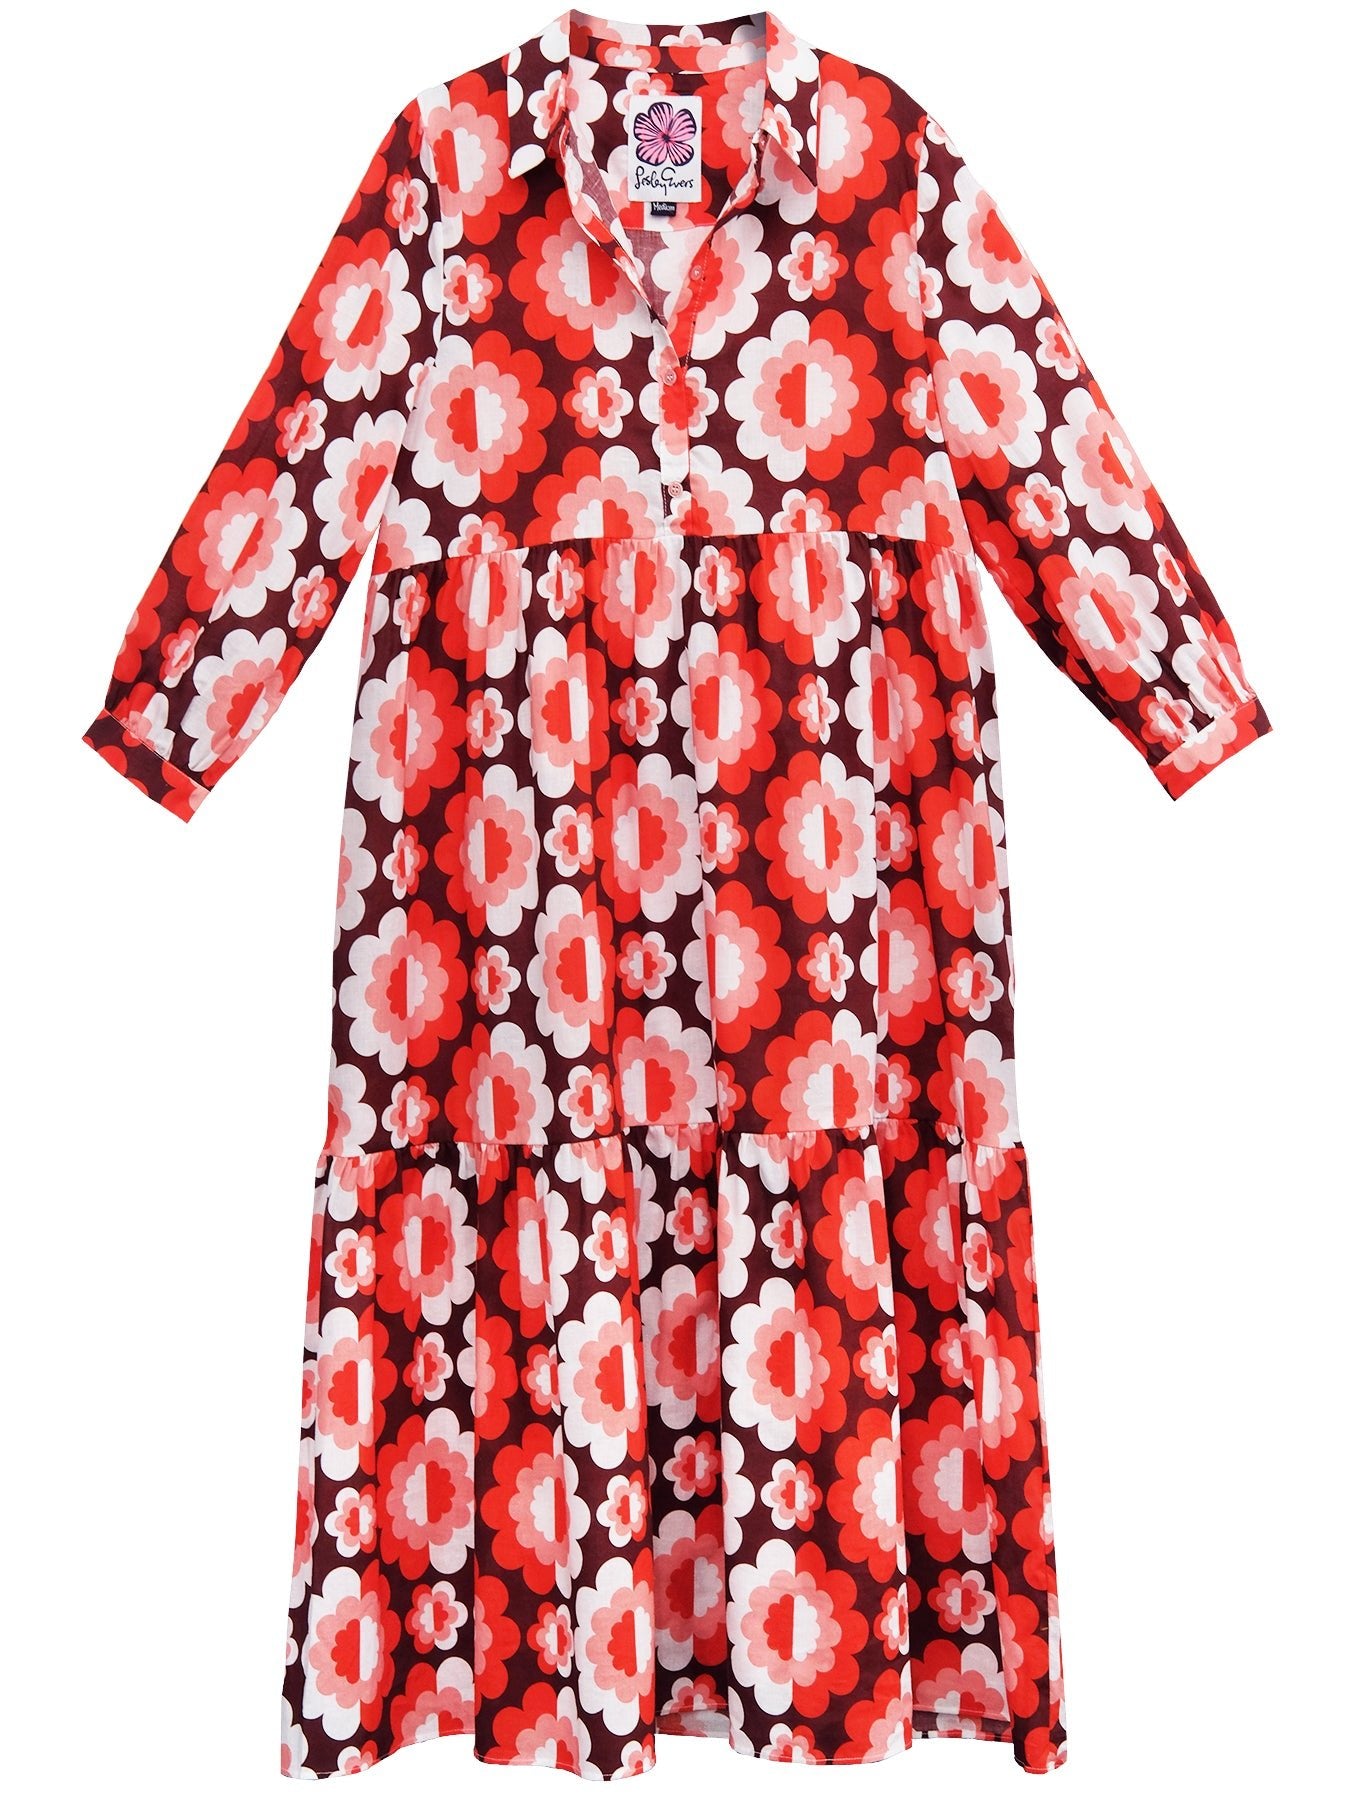 RUTHIE dress Zinnia Red - Lesley Evers-Best Seller-Dress-easter dress